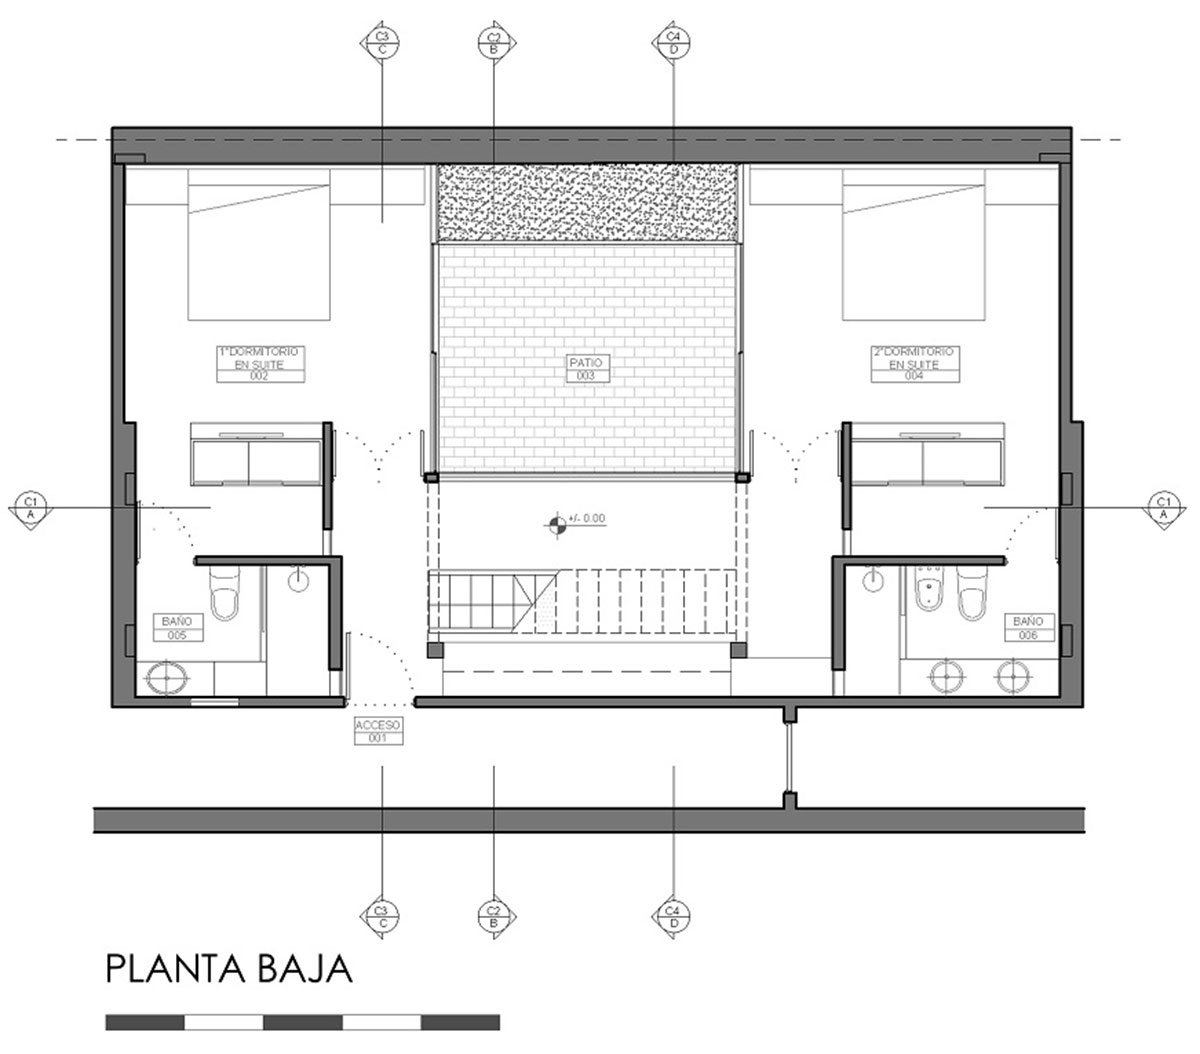 Ph El Salvador | Hitzig Militello Architects